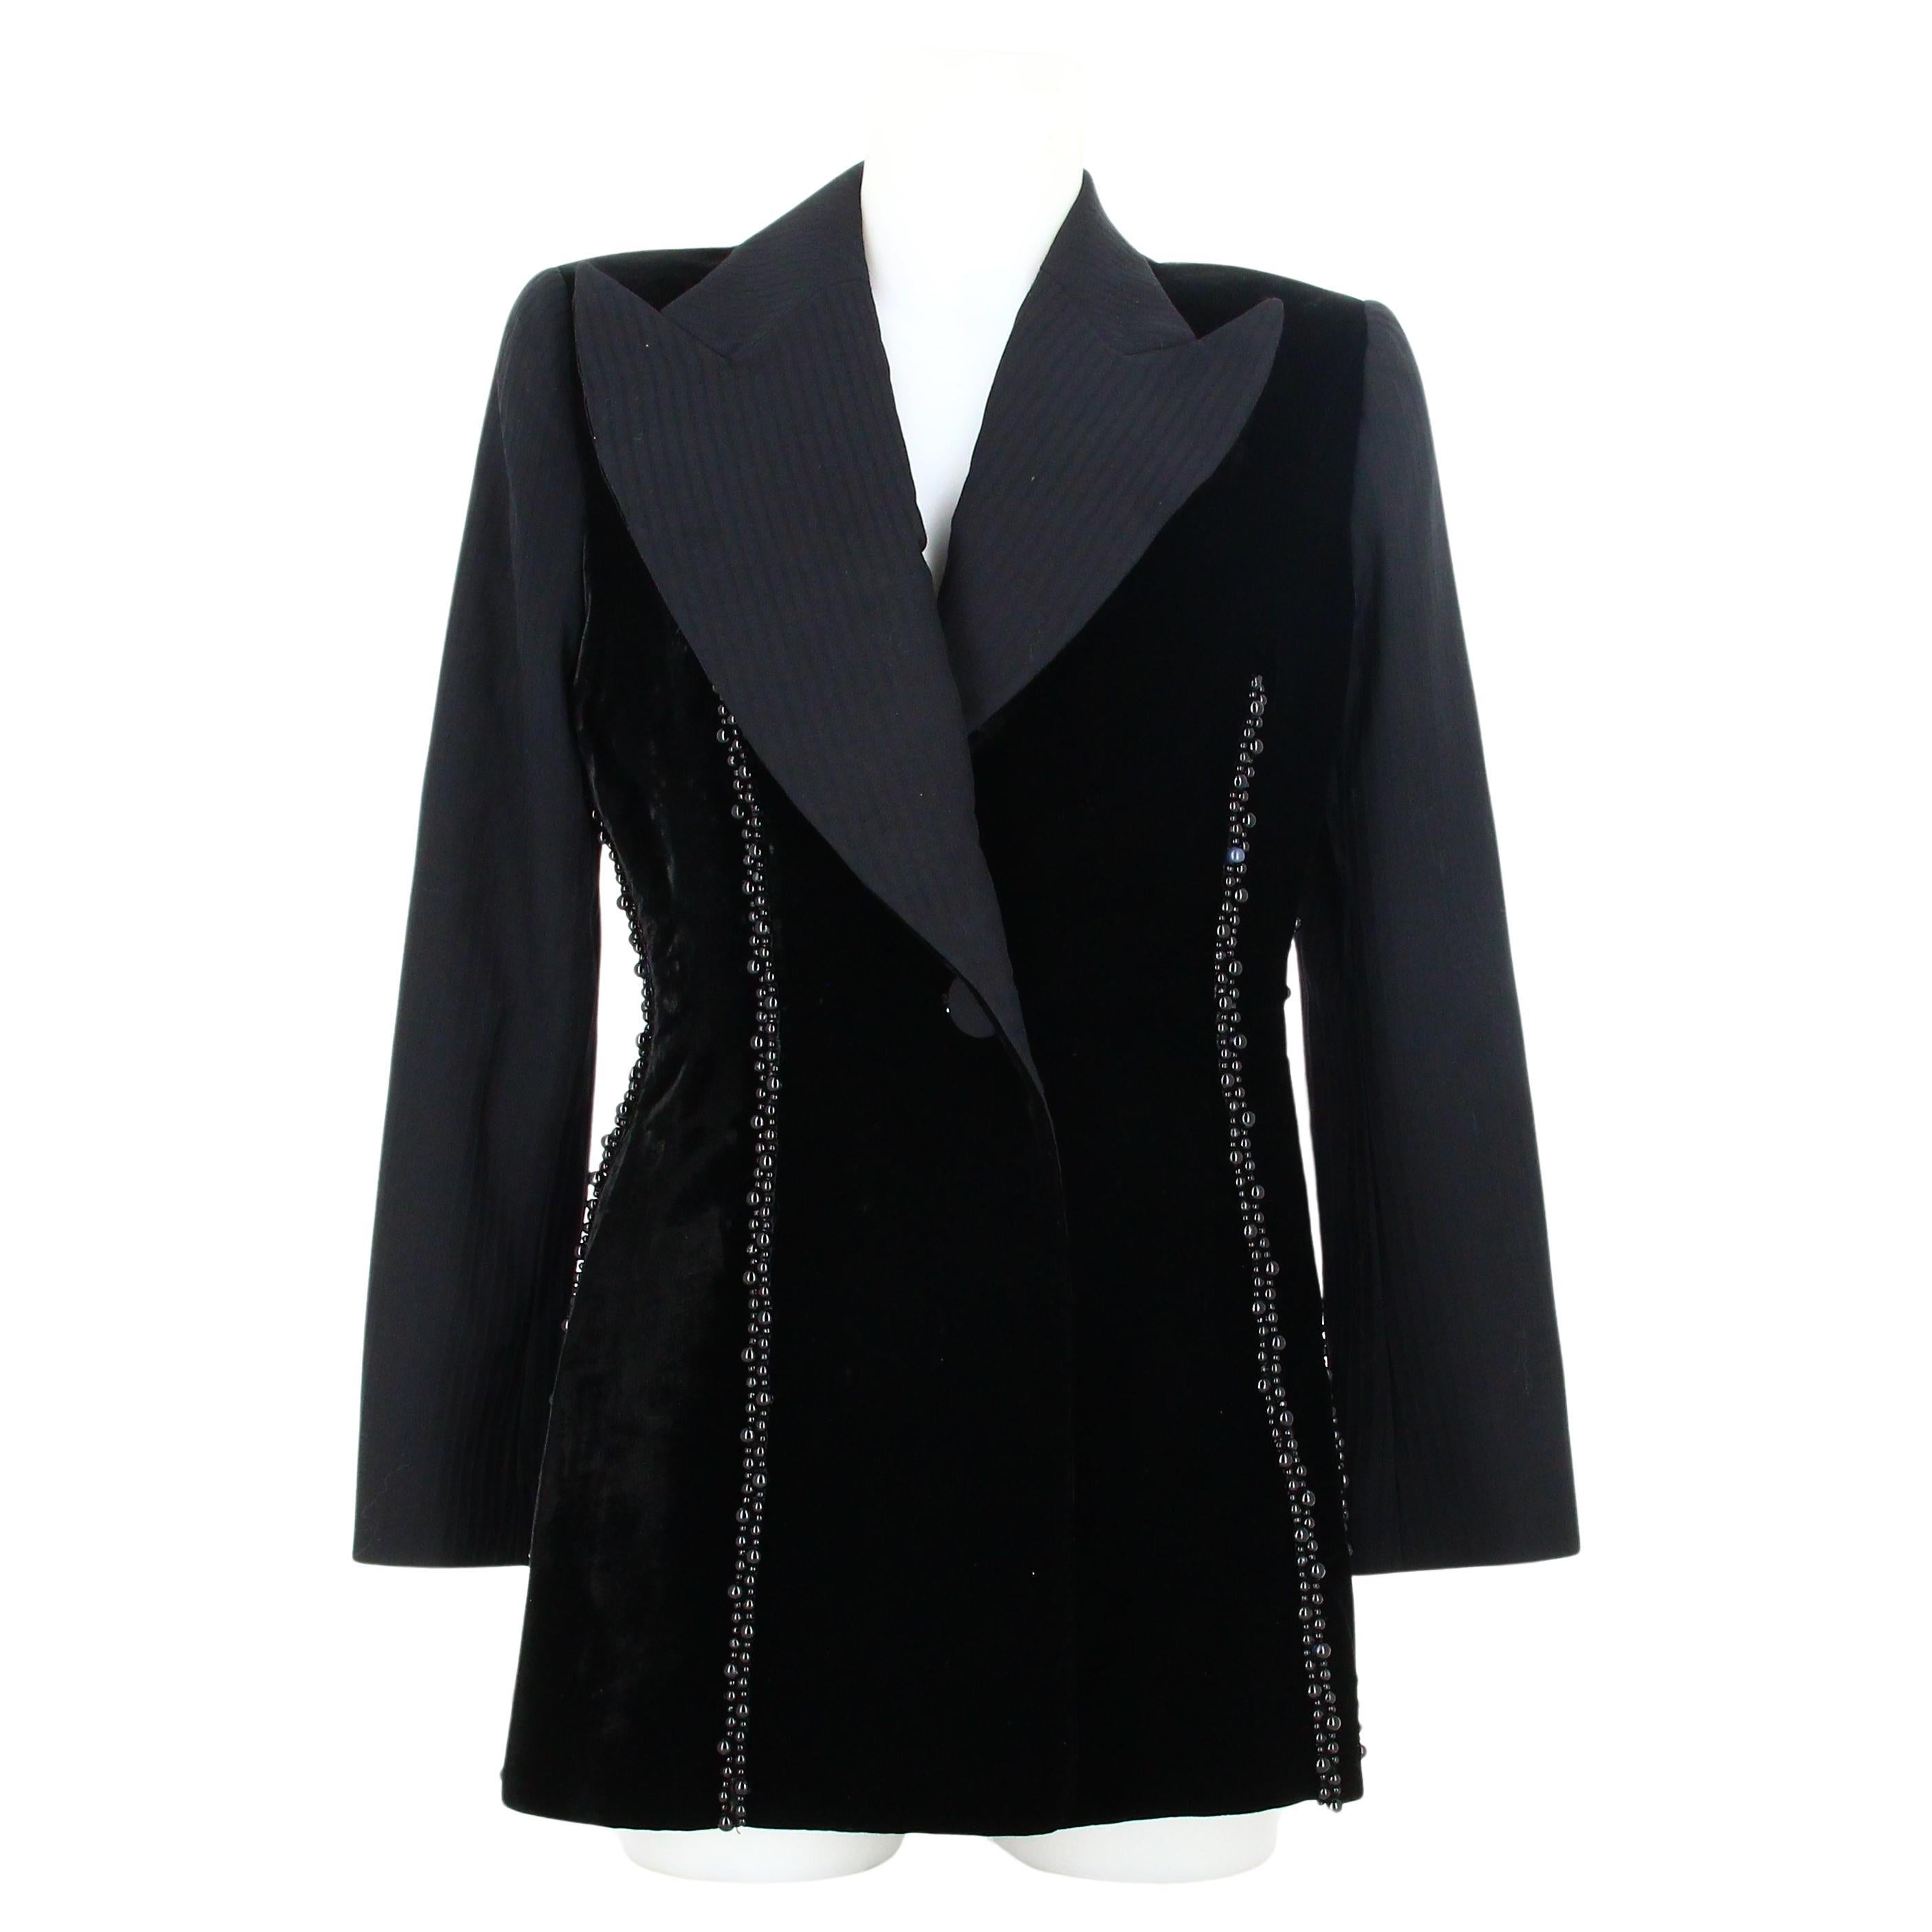 Christian Dior Black Velour Suit Jacket For Sale